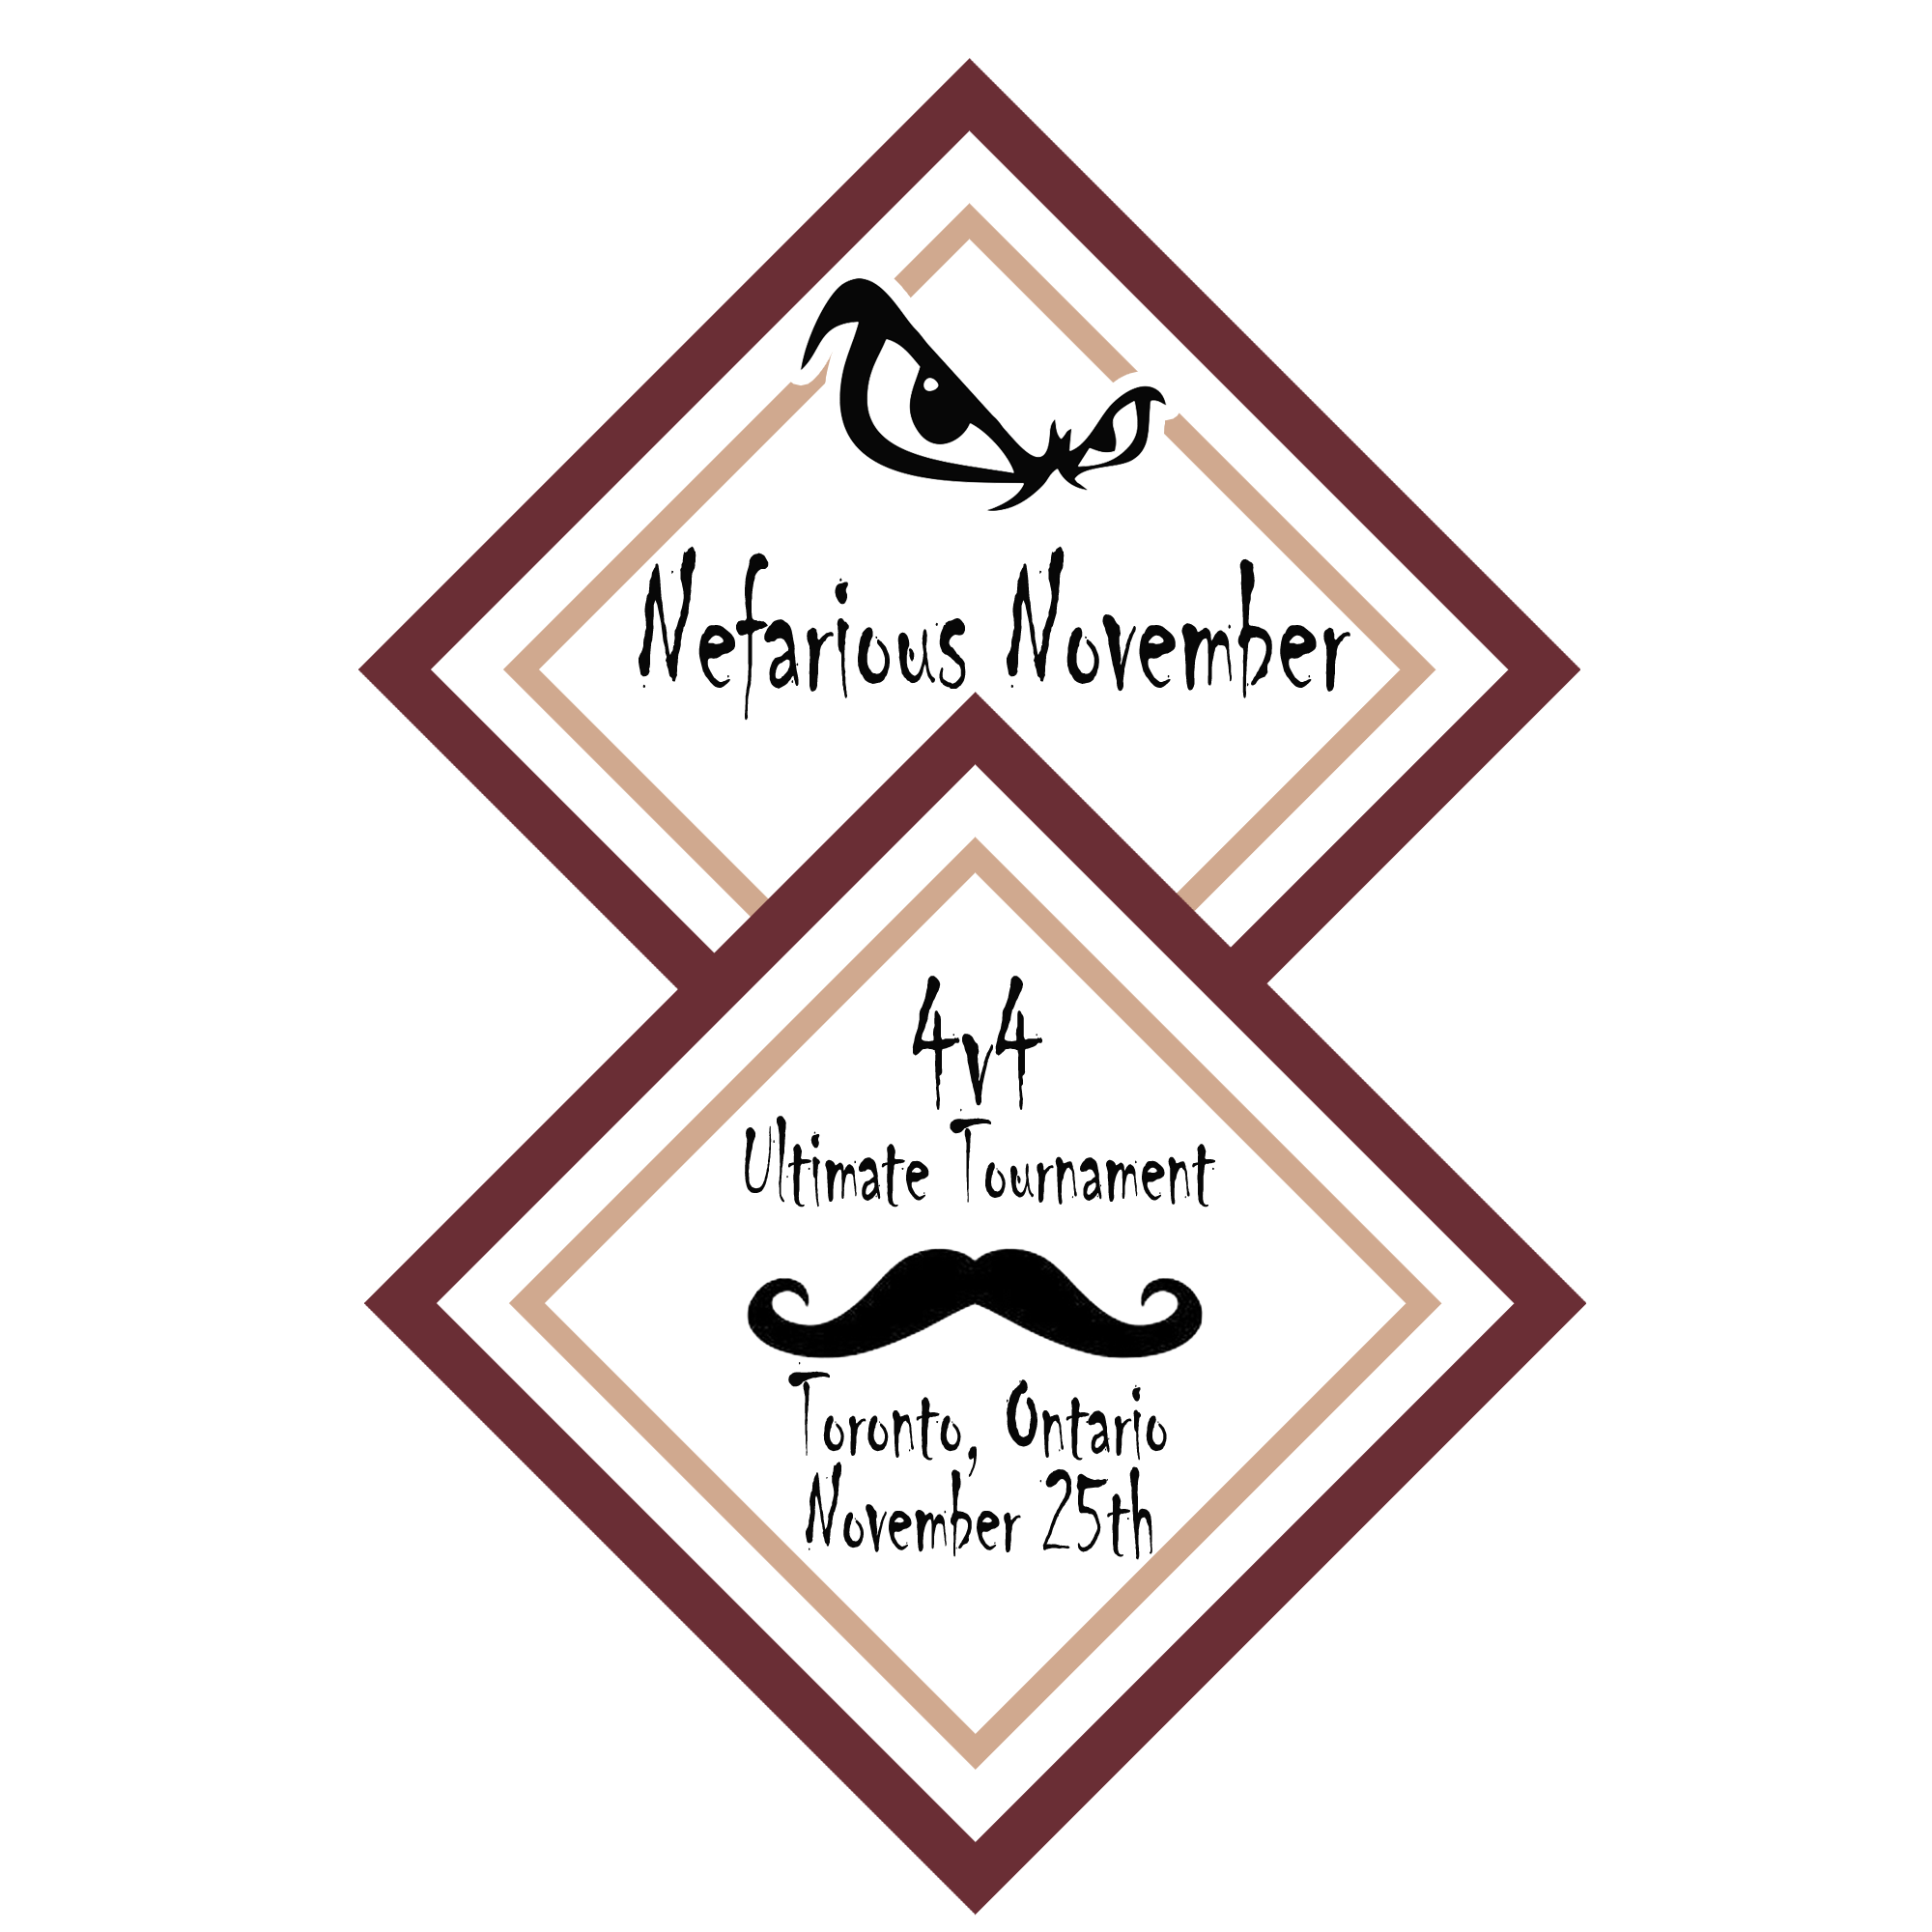 Nefarious November logo